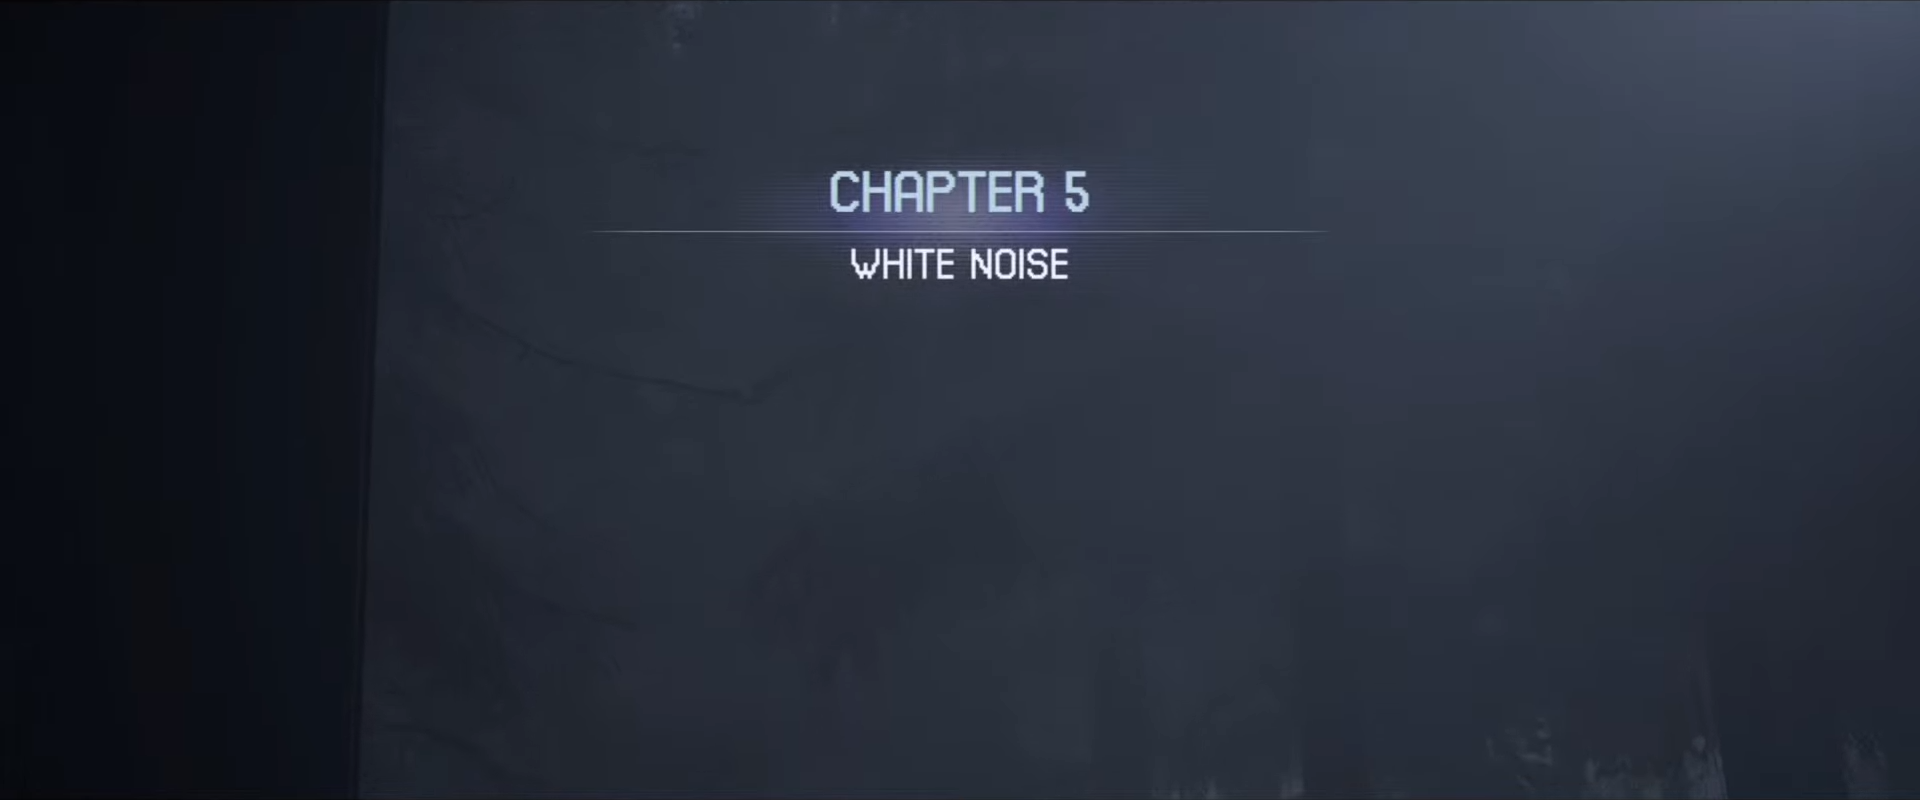 White Noise: The Light - Wikipedia